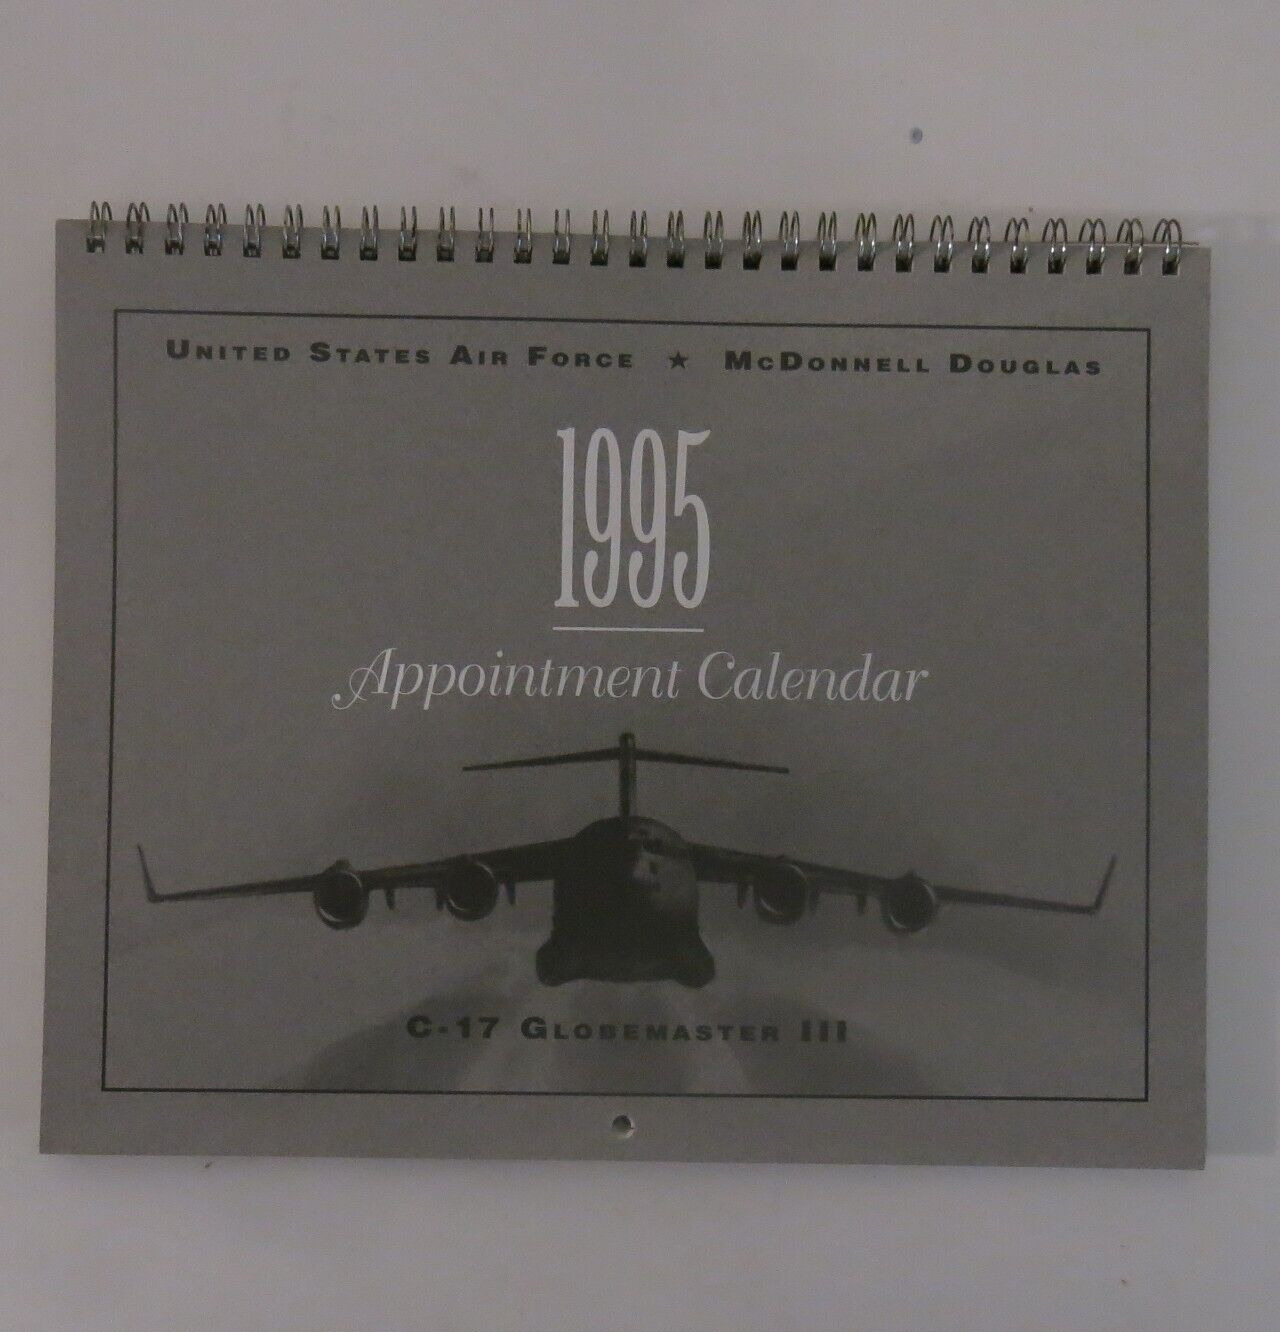 C-17 Globemaster III  1995 USAF McDonnell Douglas Appointment Calendar UNUSED NM